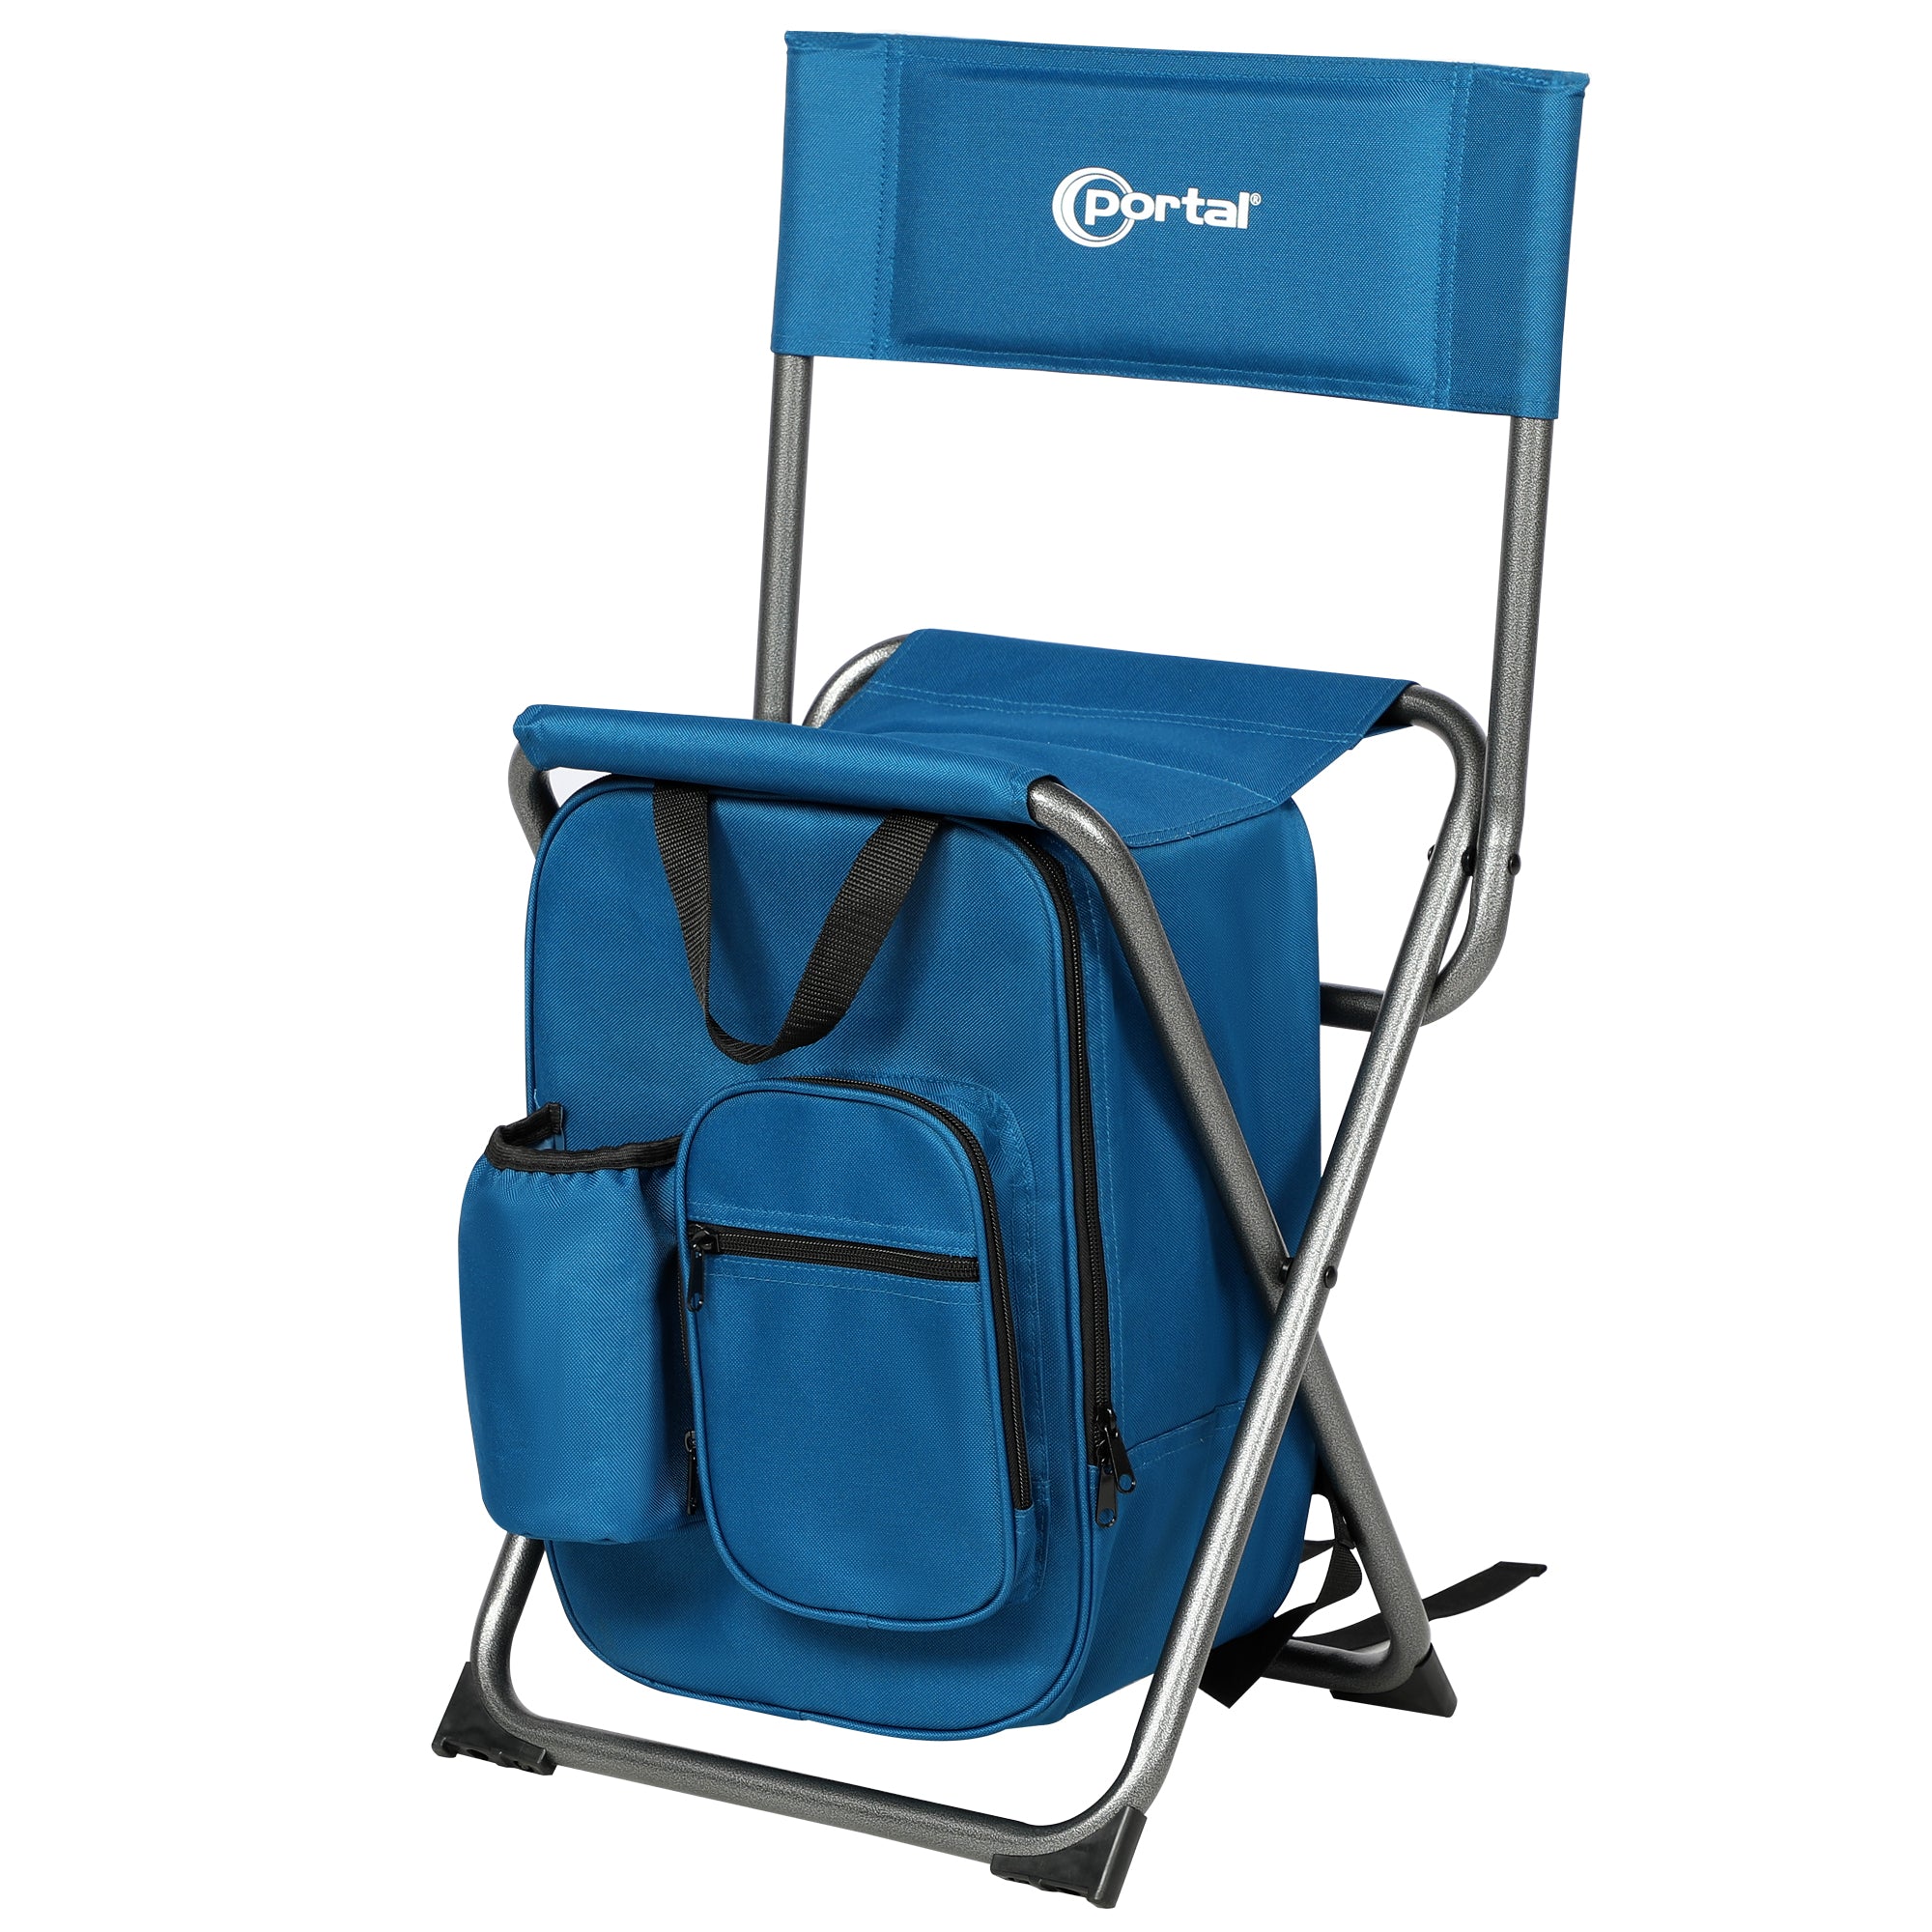 New Folding fishing chair portable fishing box light multi-function  shoulder strap back Comfortable backrest Chair fishing box